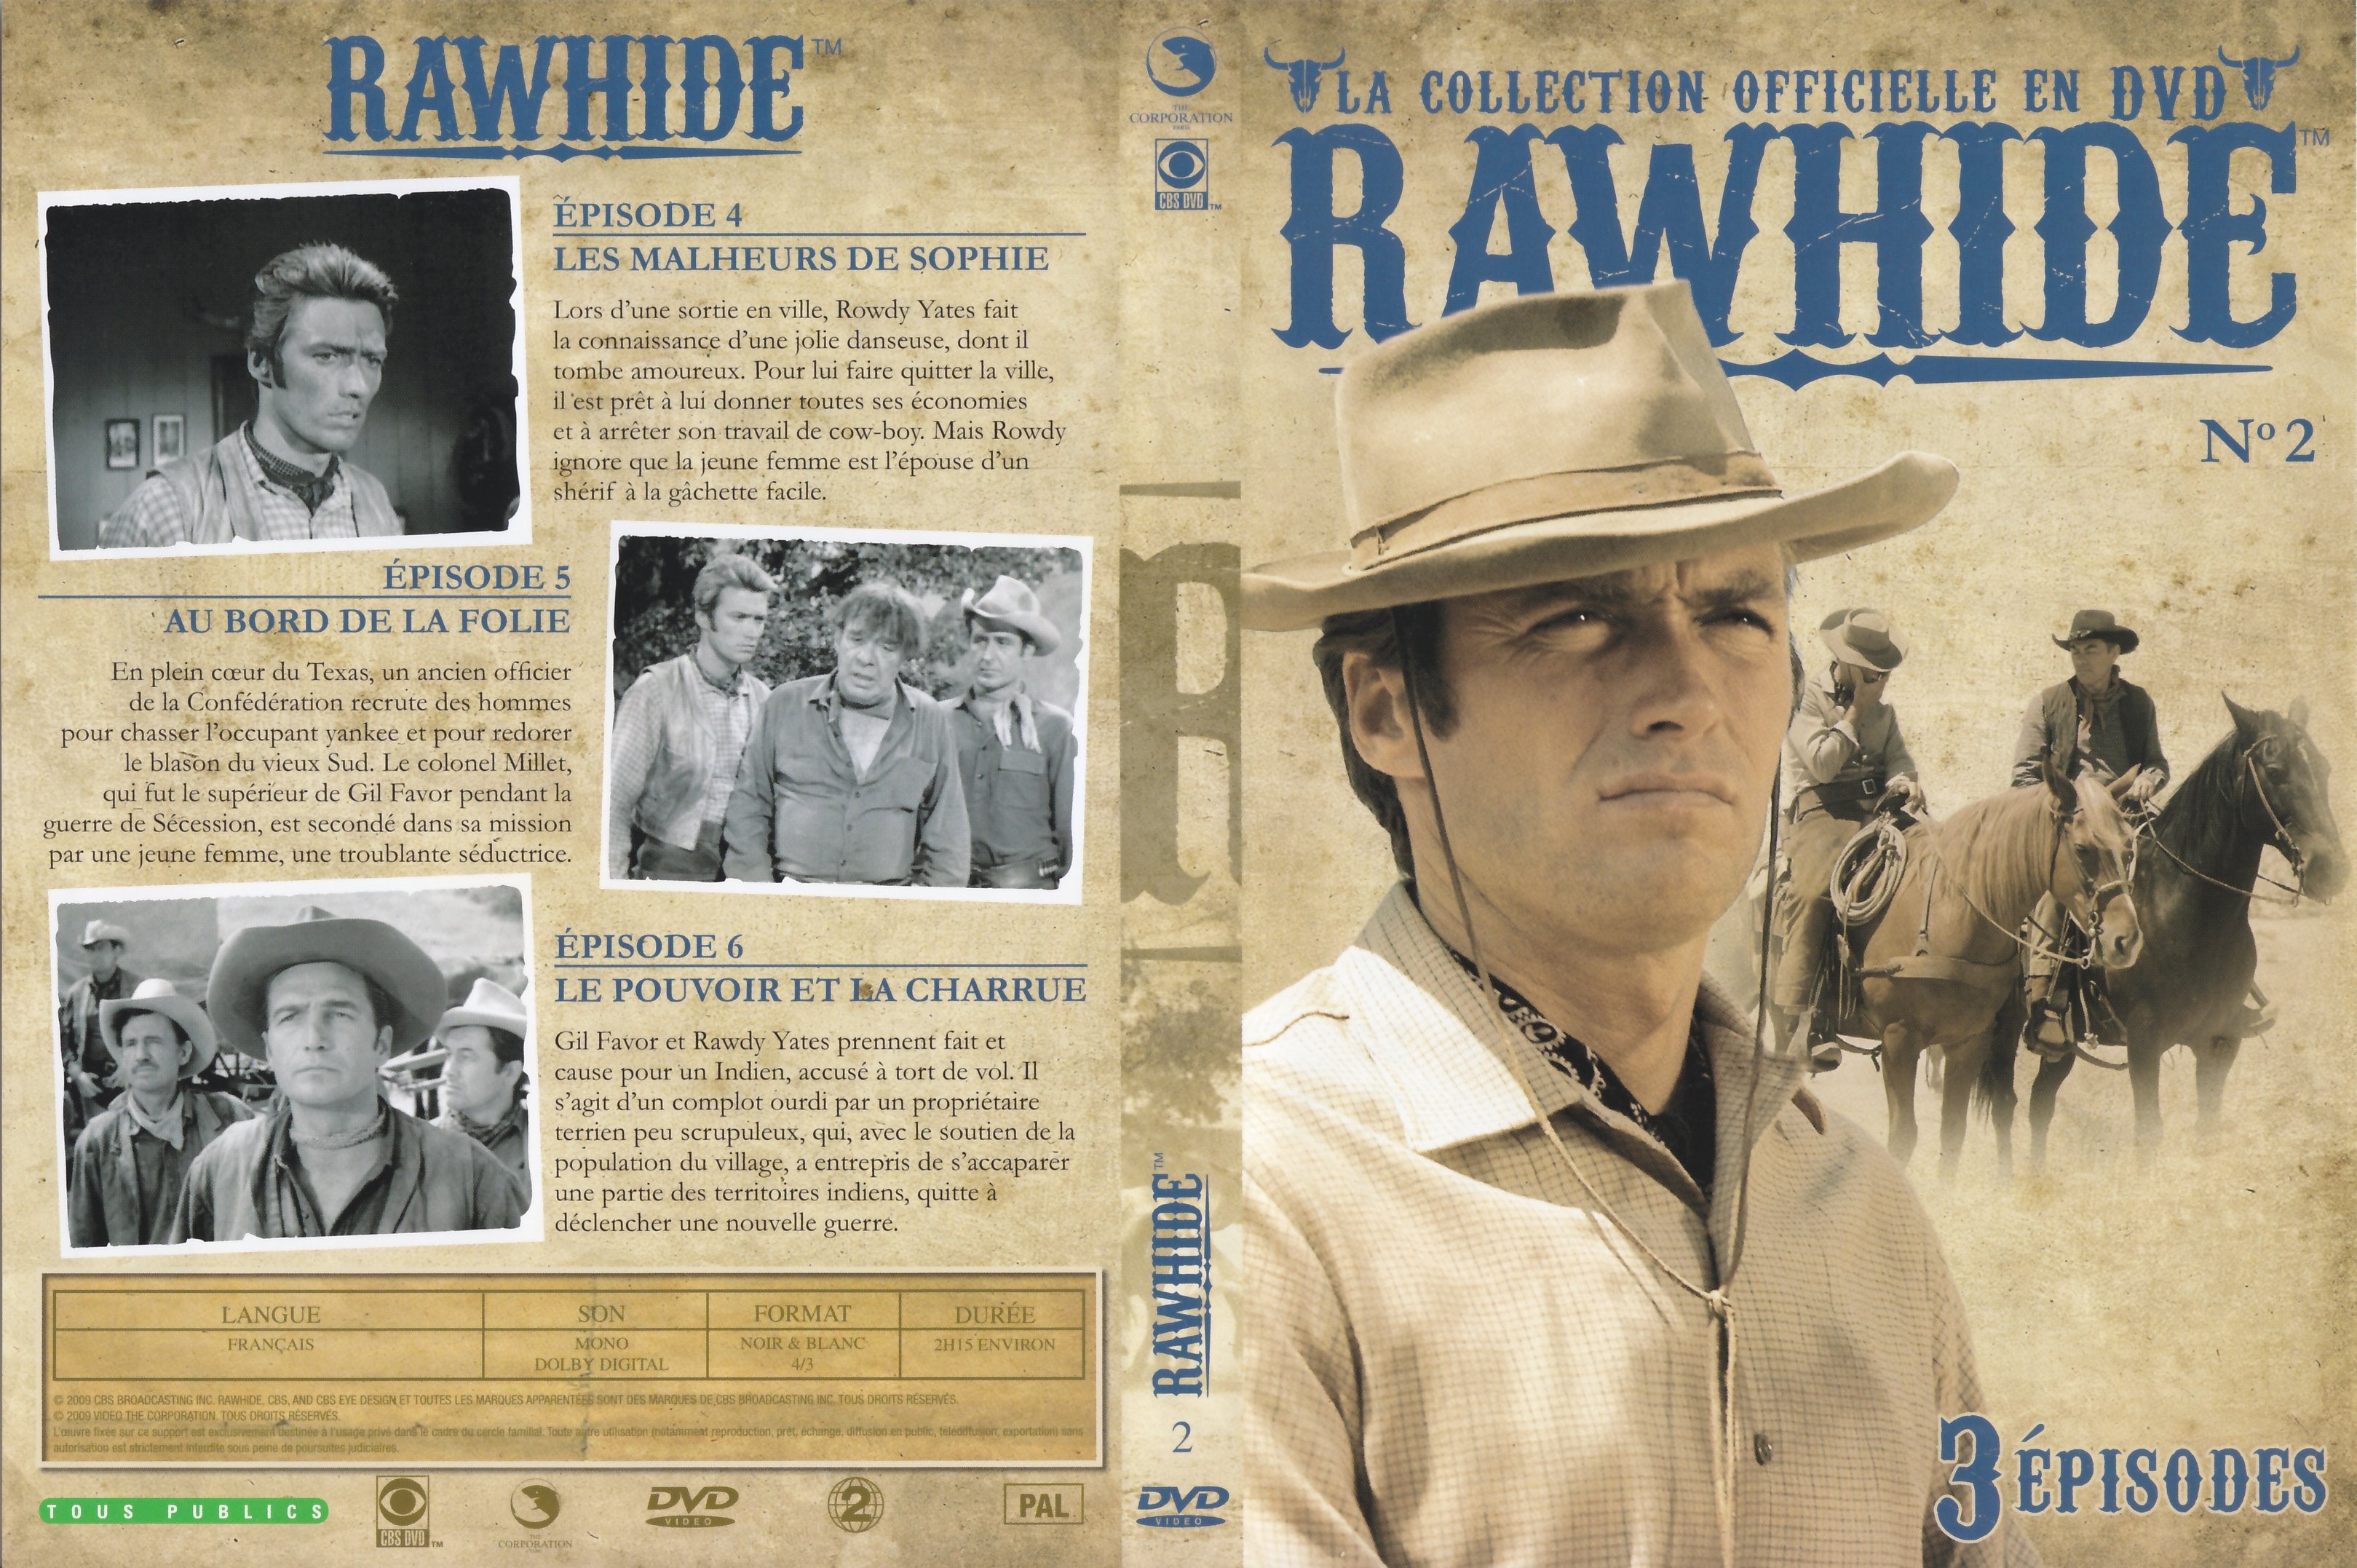 Jaquette DVD Rawhide DVD 02